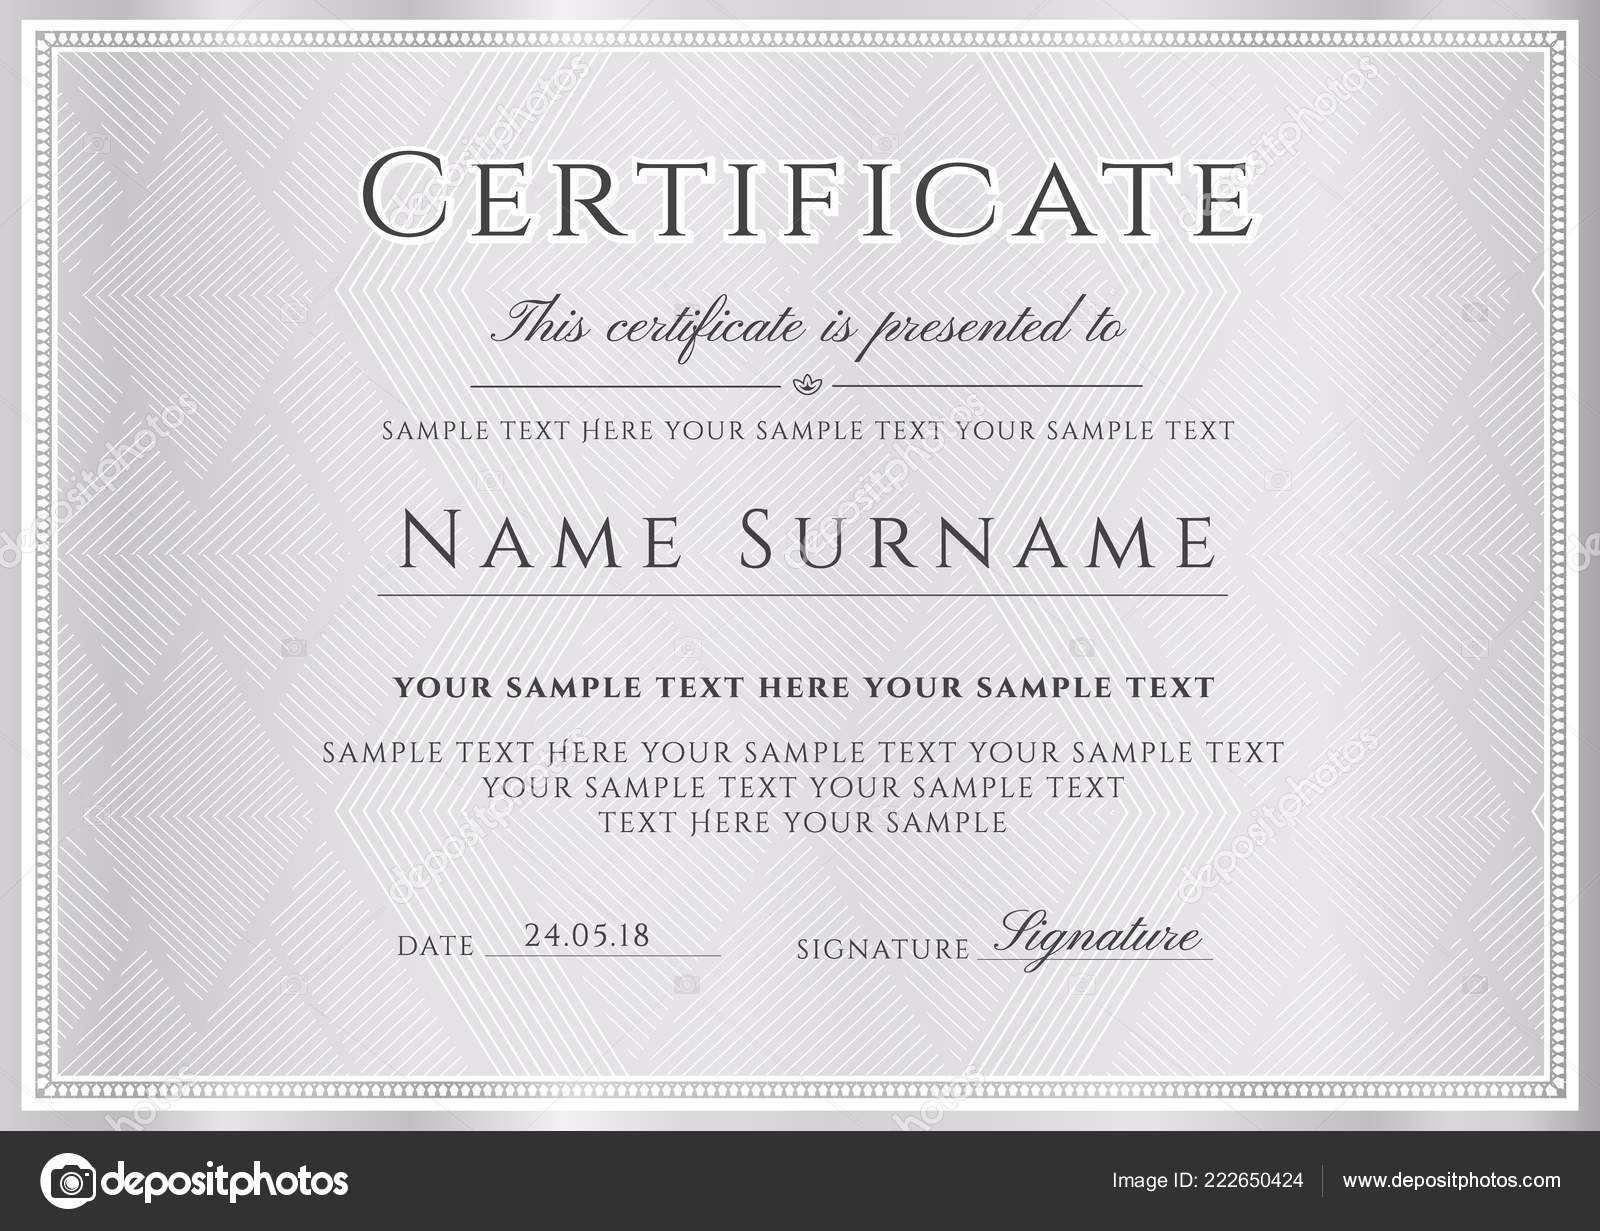 Background: Formal Certificate Design | Certificate Vector Inside Commemorative Certificate Template